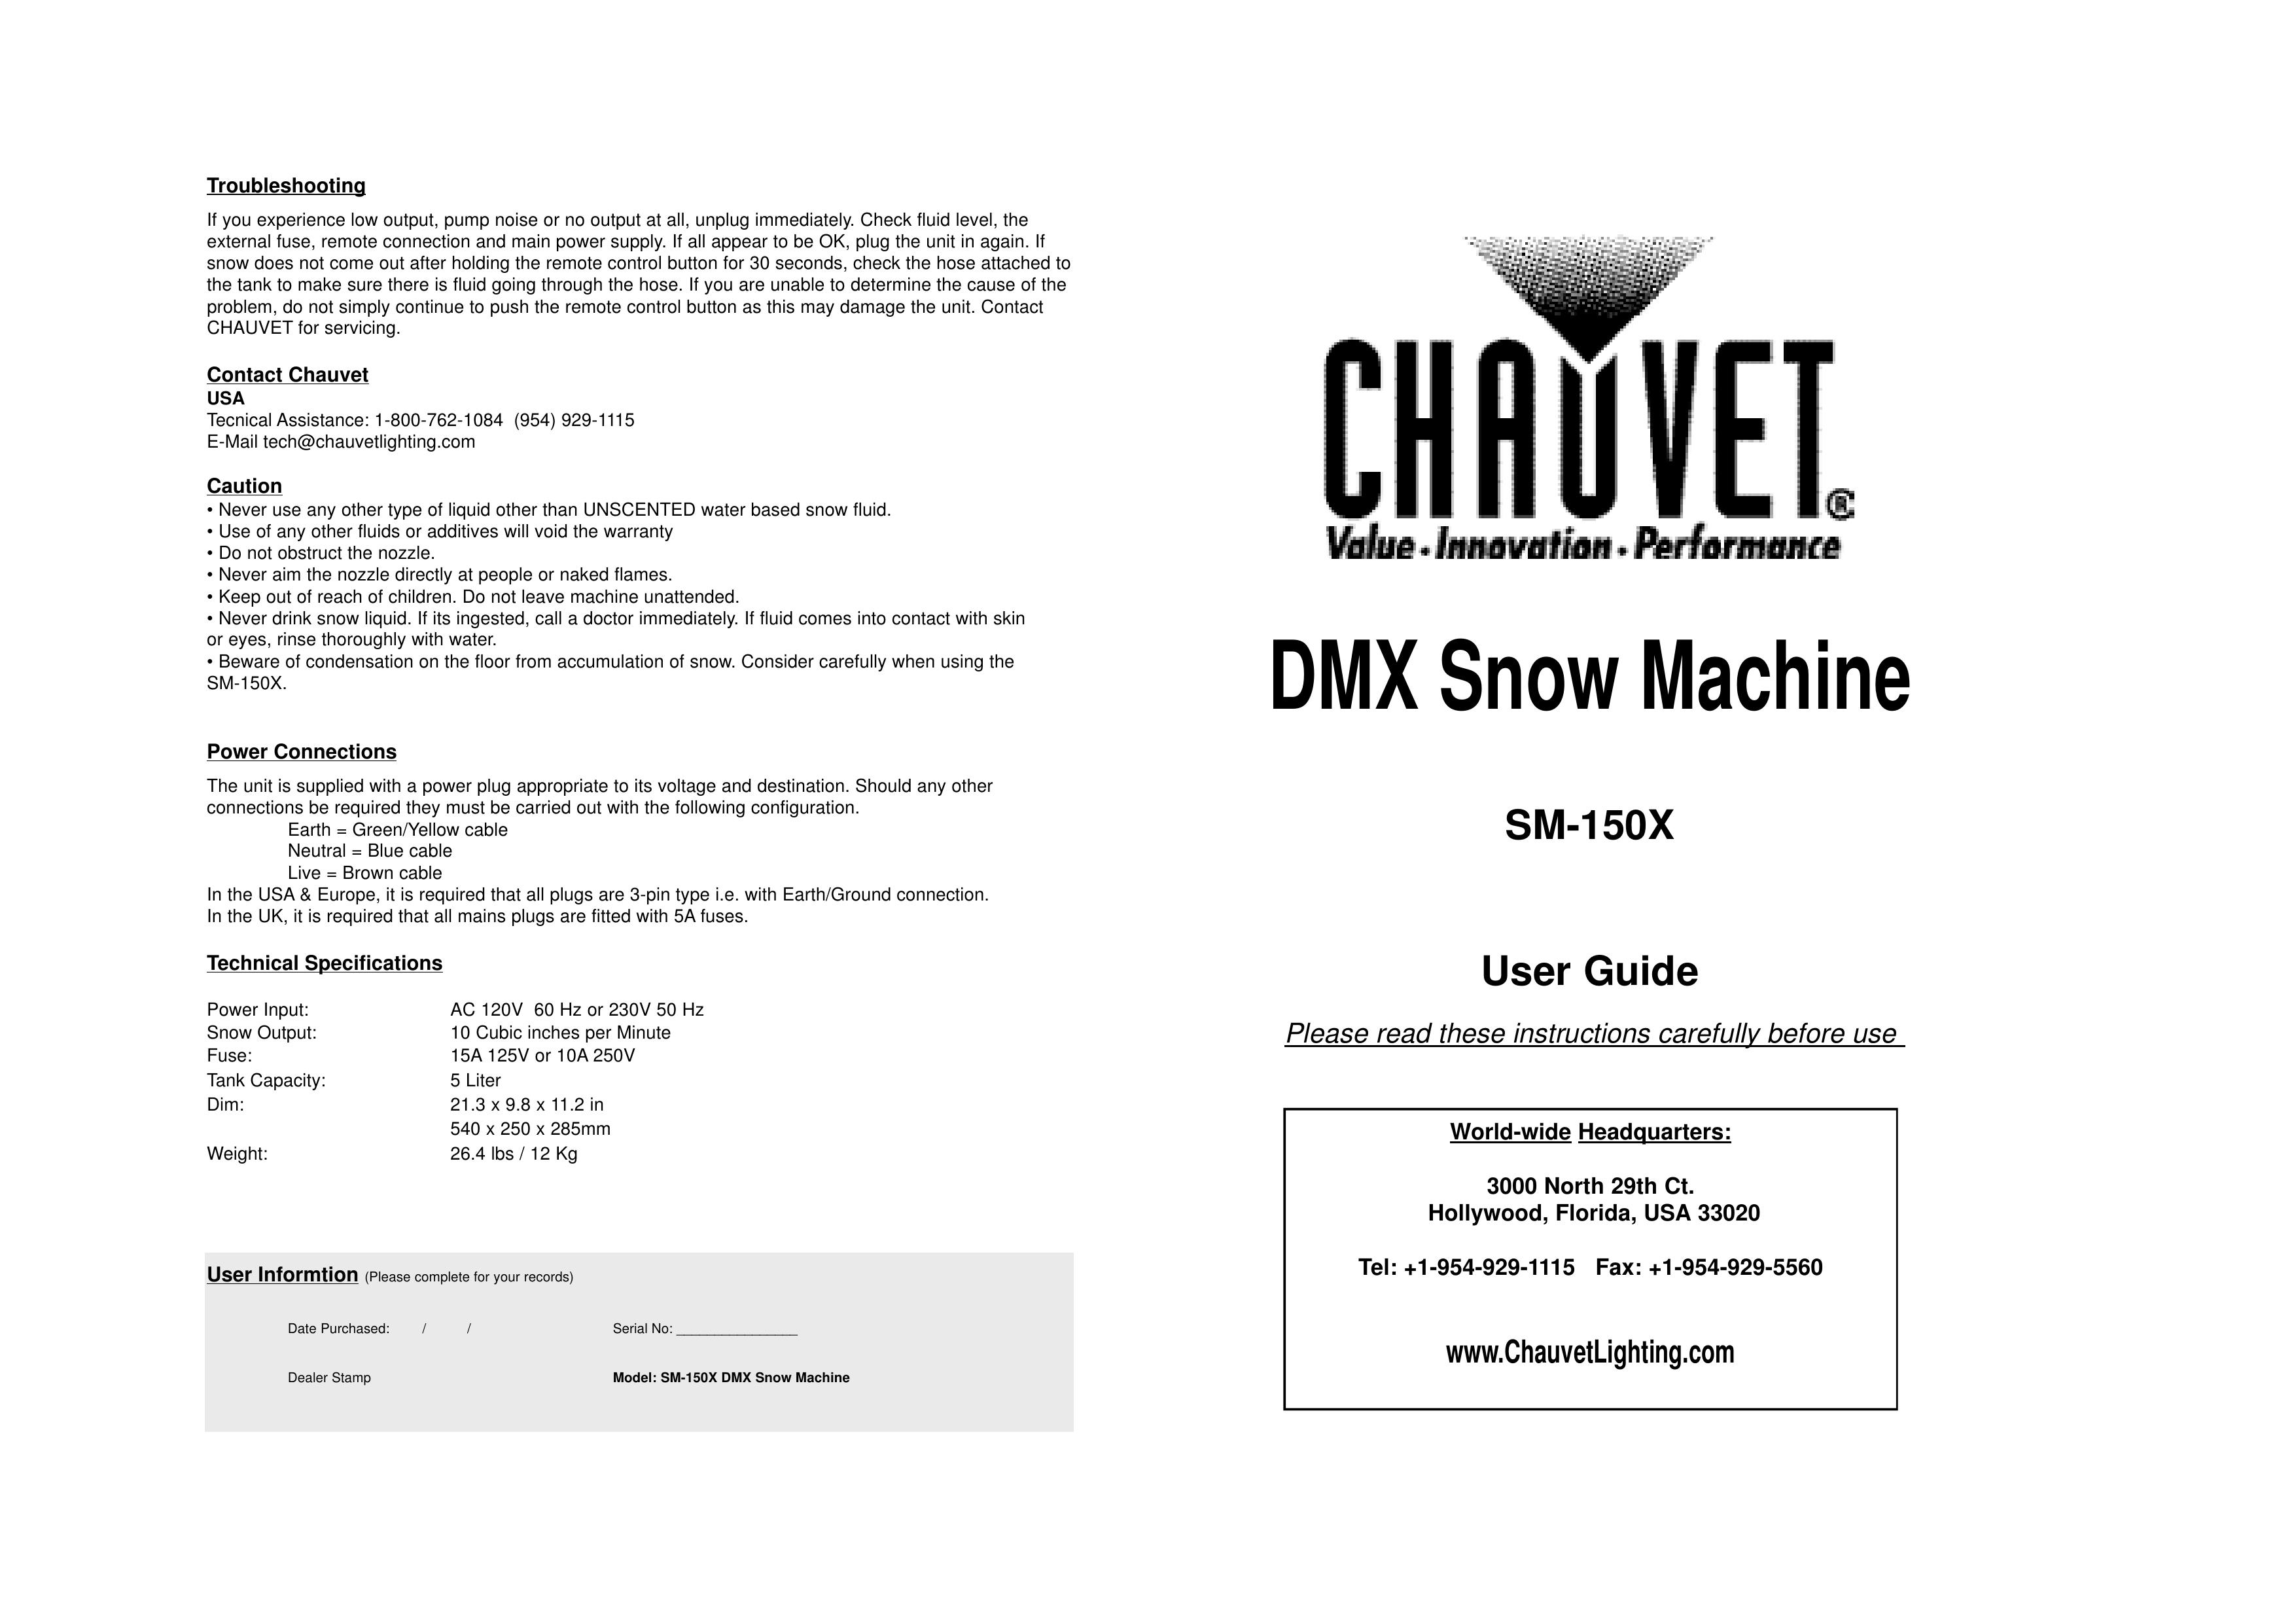 Chauvet SM-150X Snow Blower User Manual